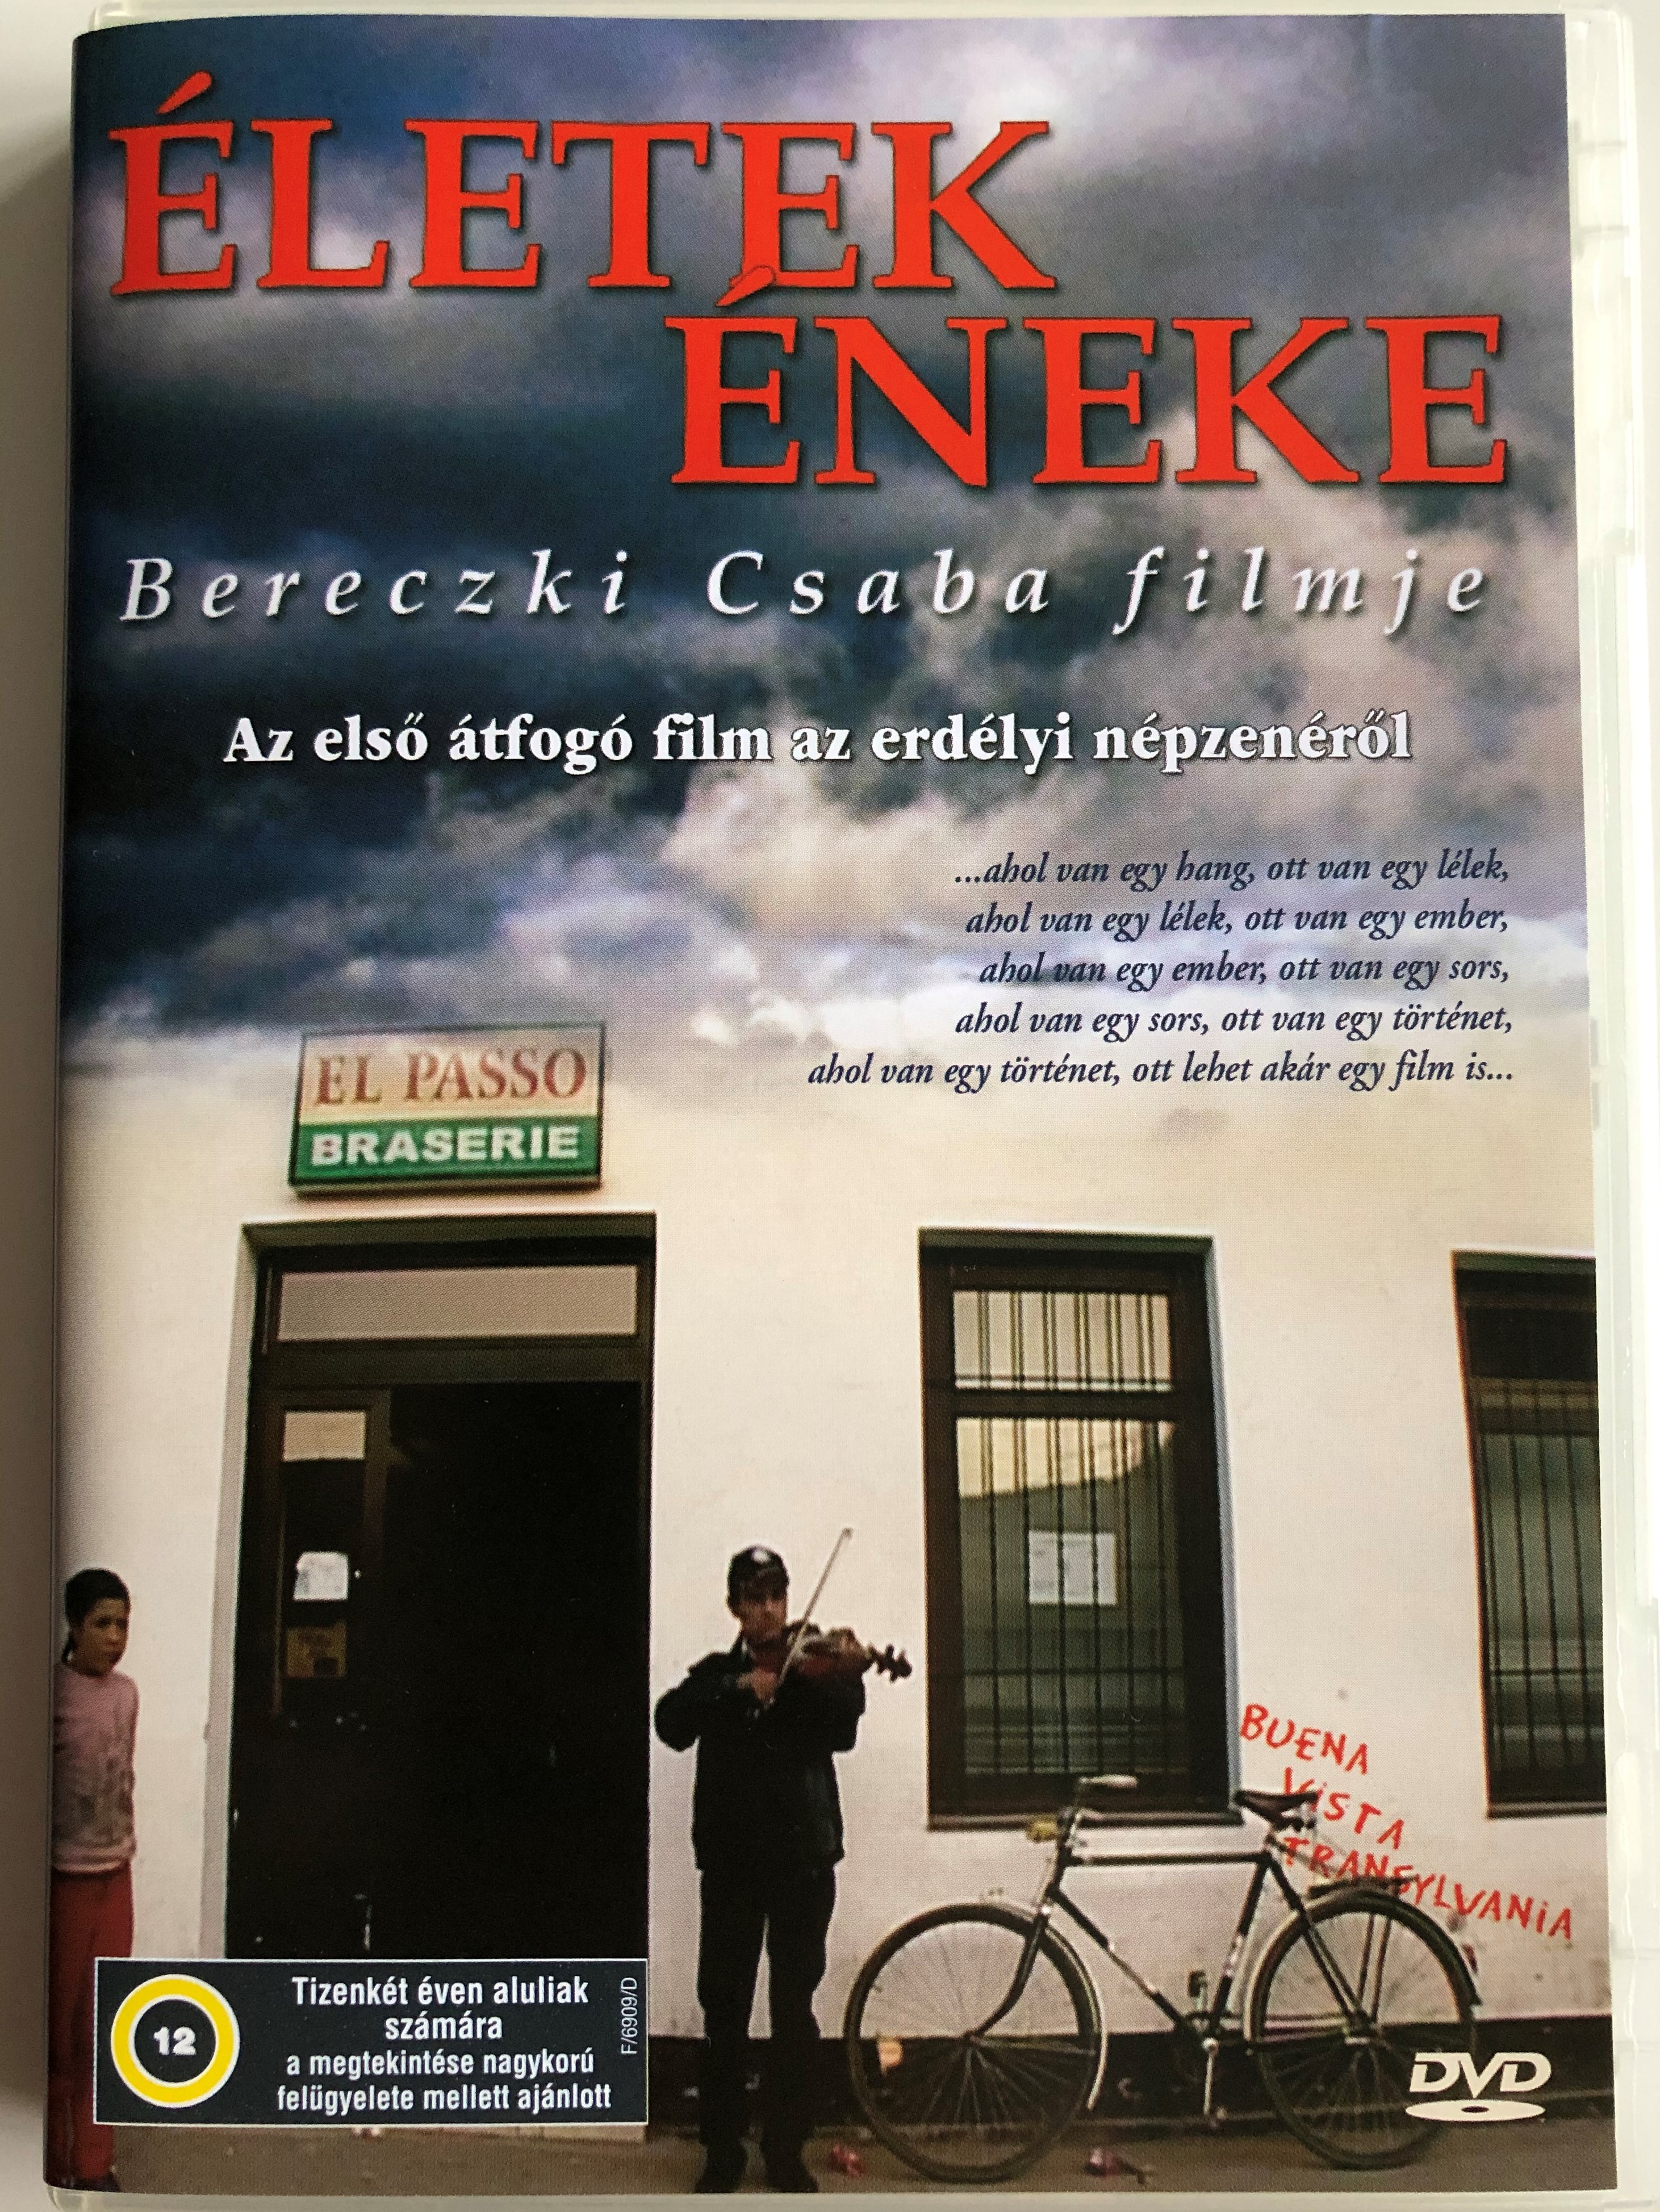 -letek-neke-dvd-2008-songs-of-lives-directed-by-bereczki-csaba-first-concise-film-about-transylvanian-music-1-.jpg